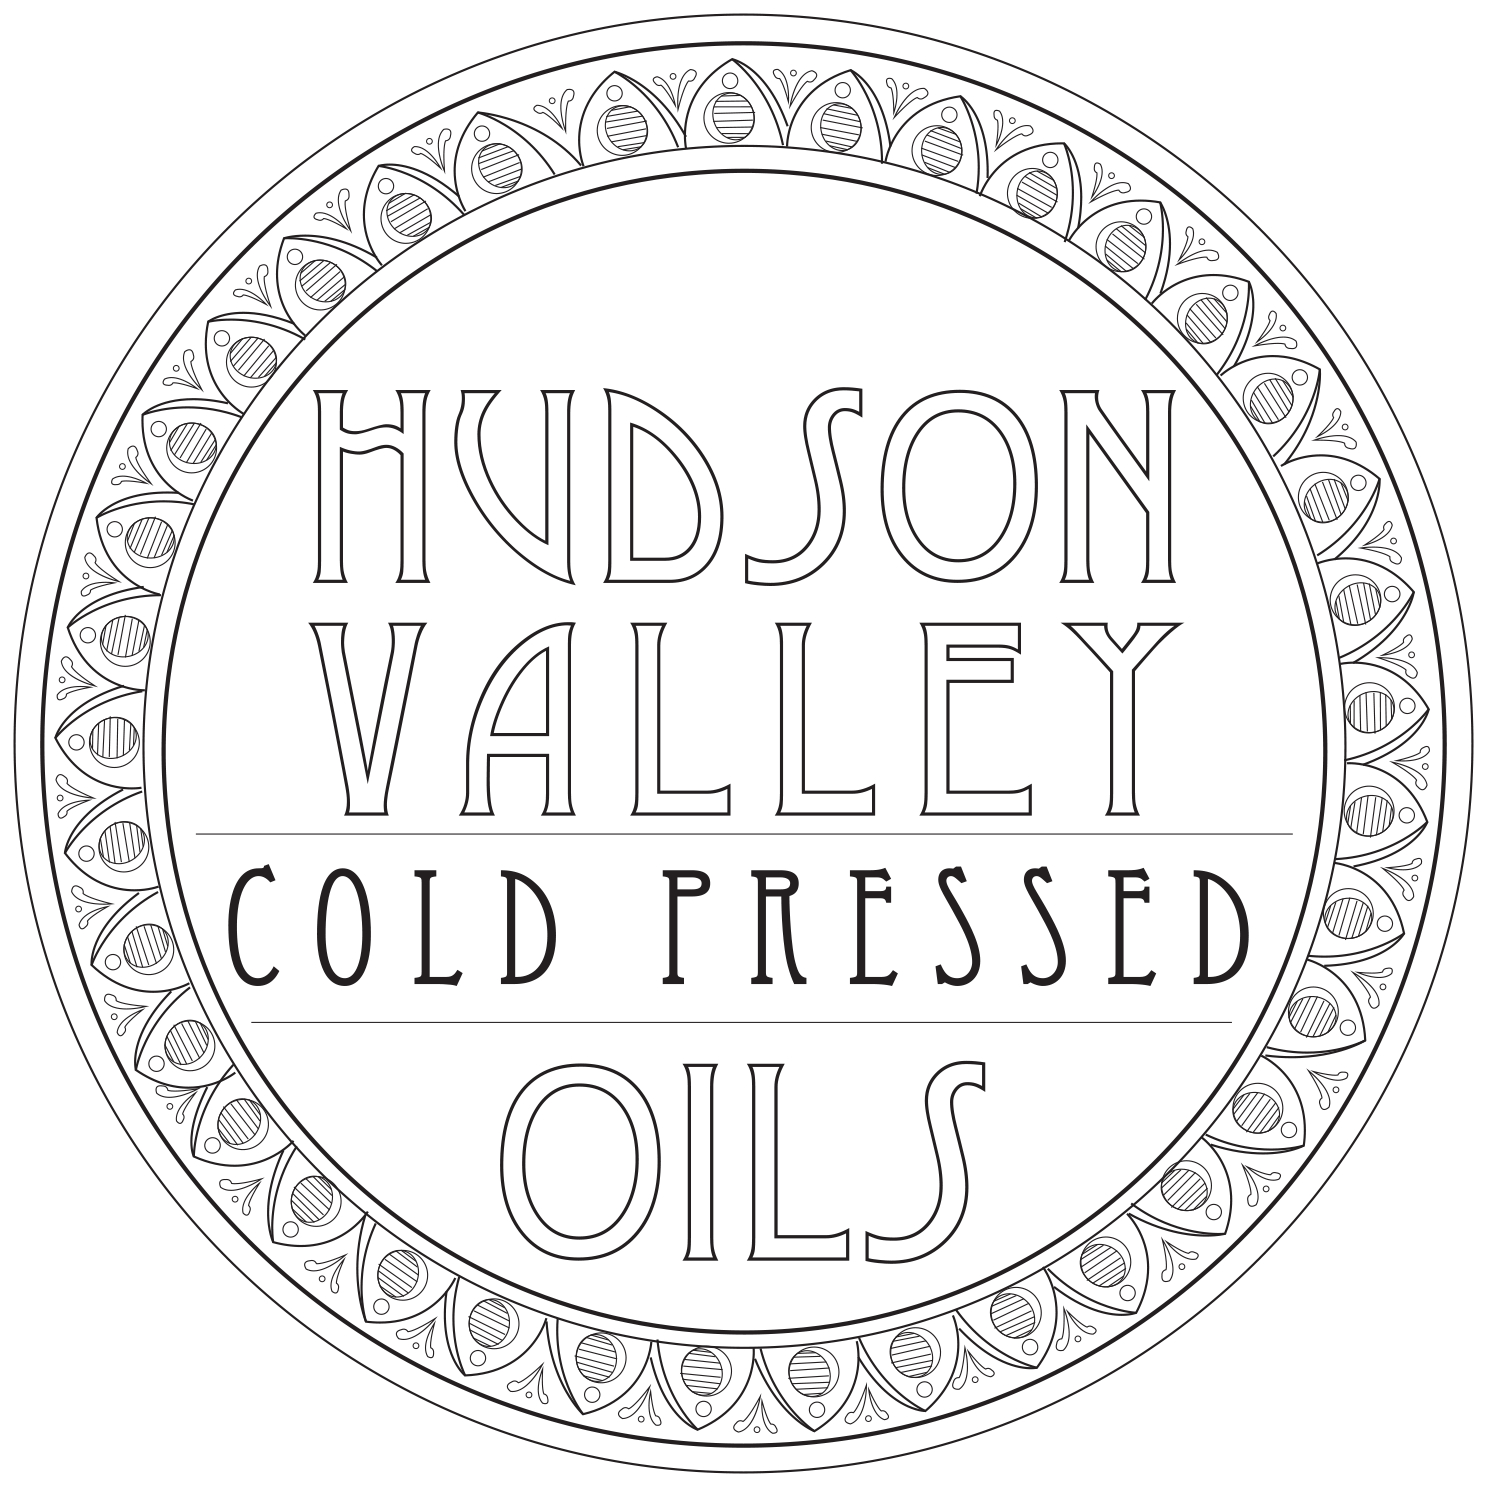 Hudson Valley Cold Pressed Oils